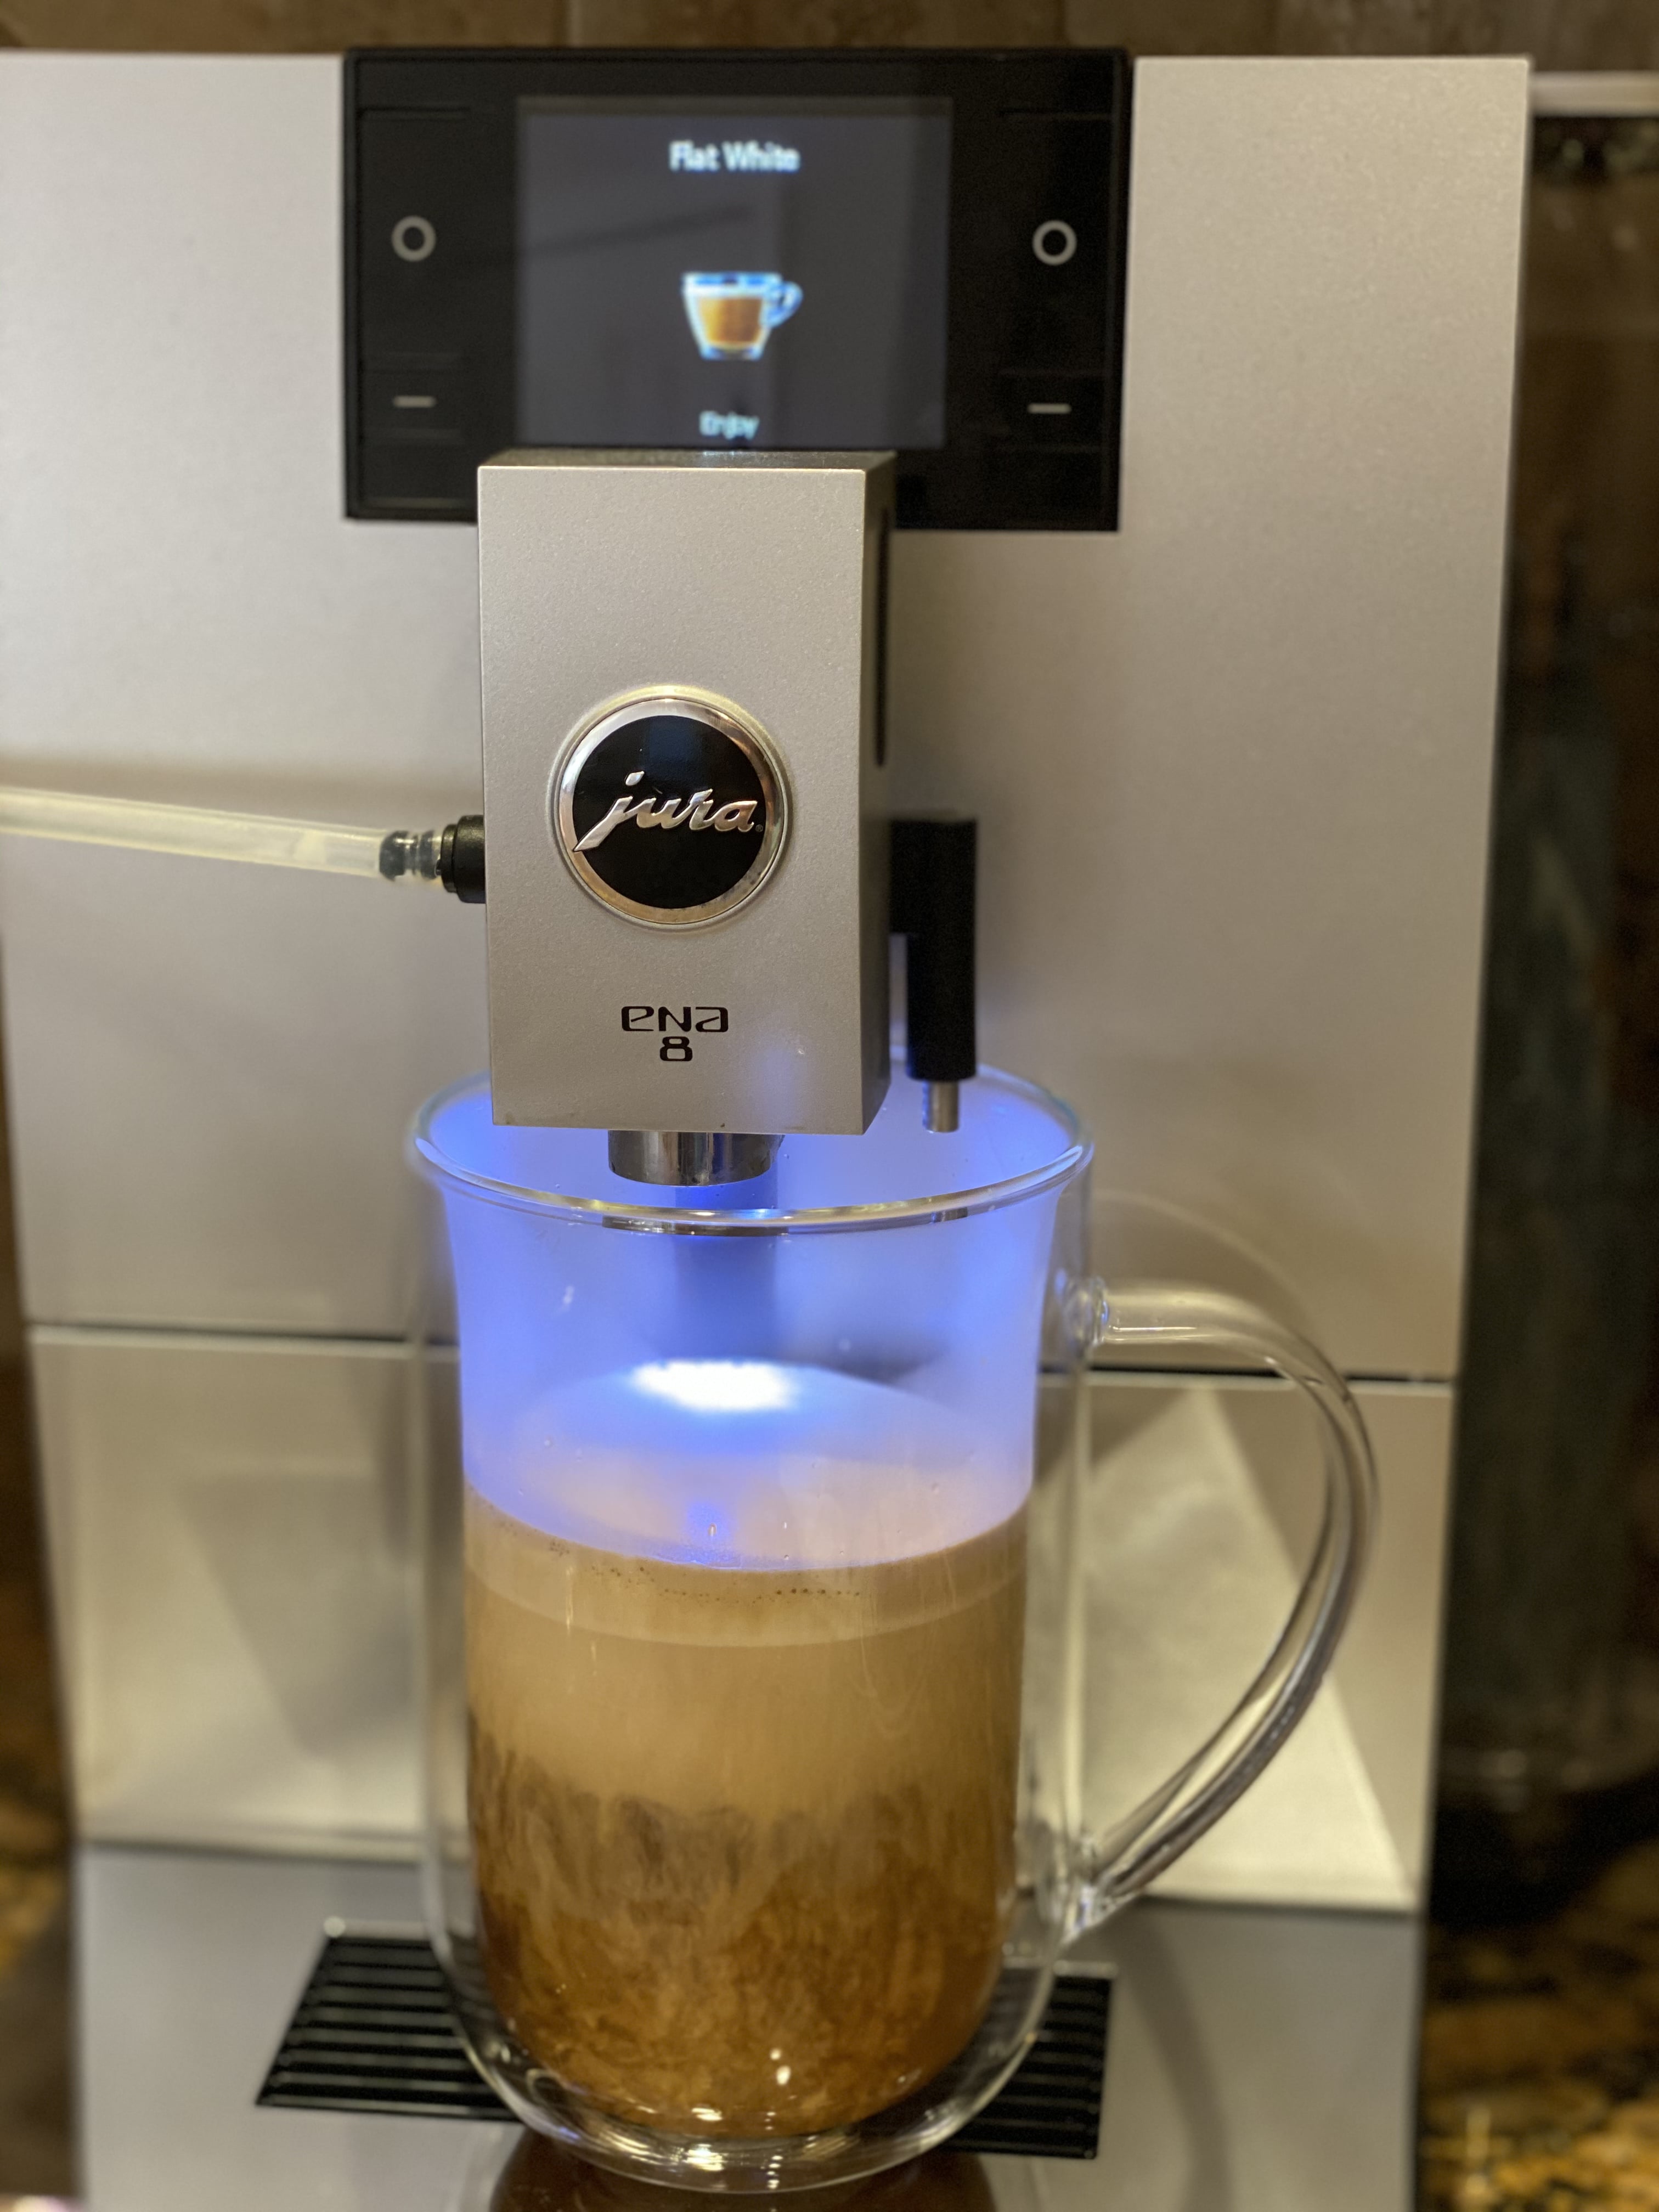 Jura ENA 8 Coffee Machine Review